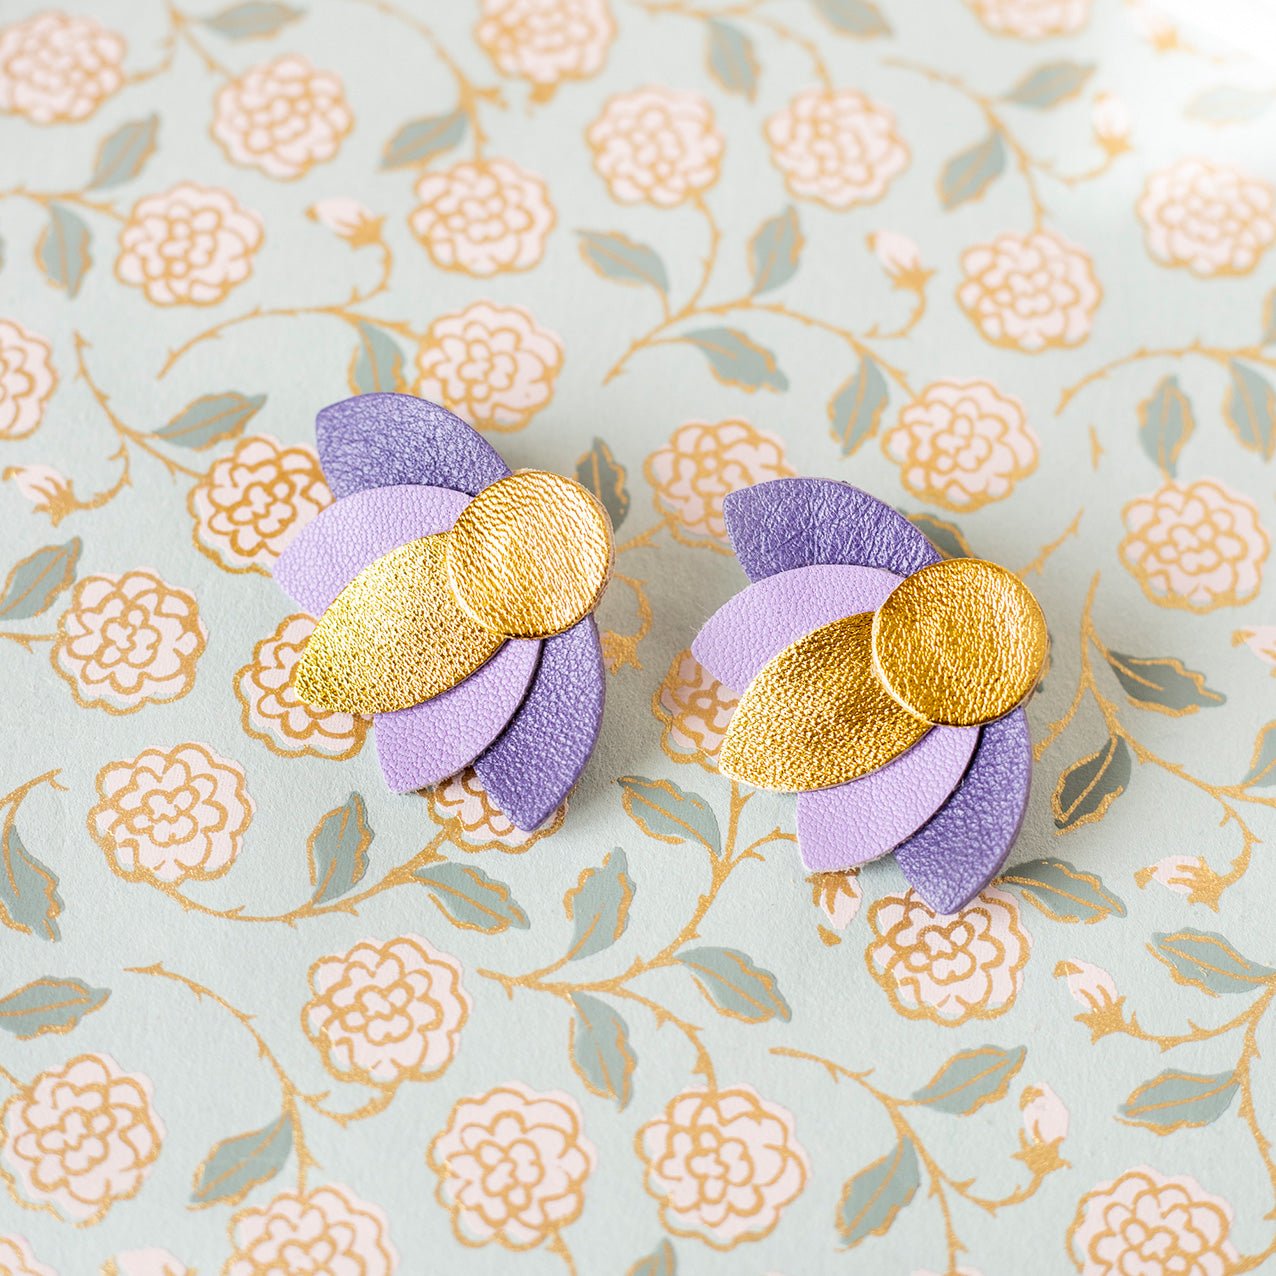 Large Lotus Flower stud earrings - gold, purple and amethyst purple